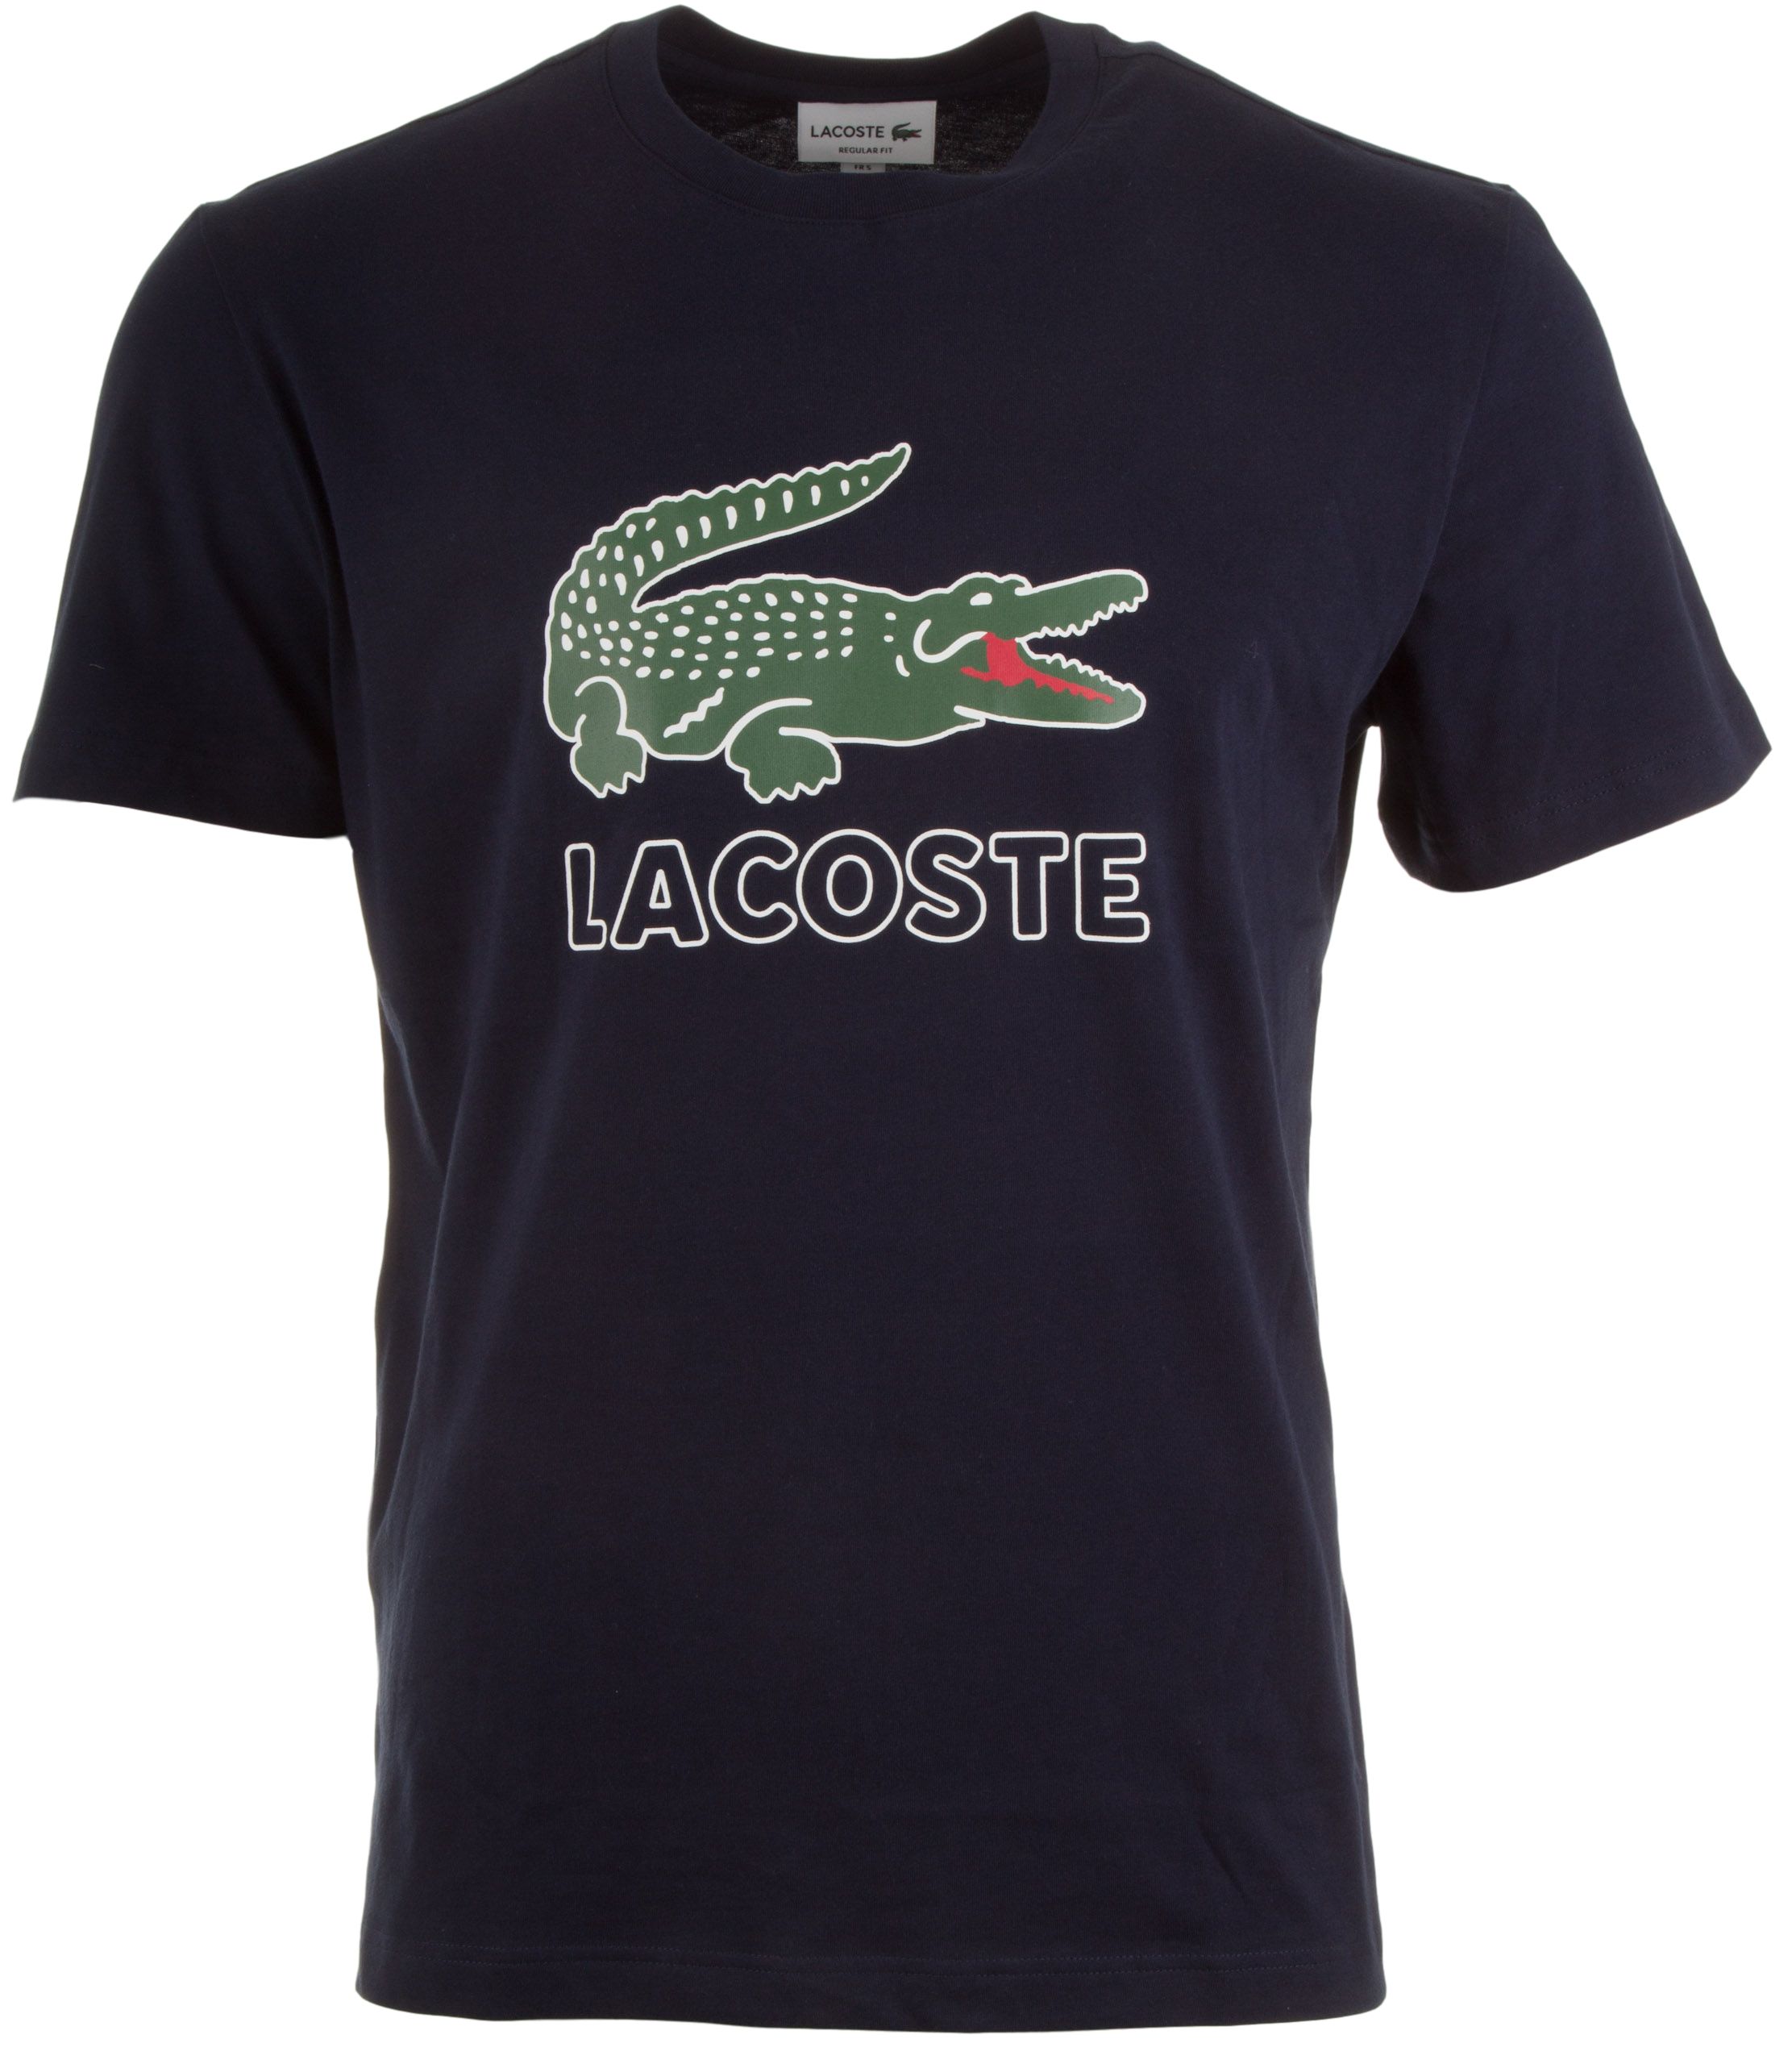 Lacoste Crocodile T-Shirt Navy | Jan Rozing Men's Fashion